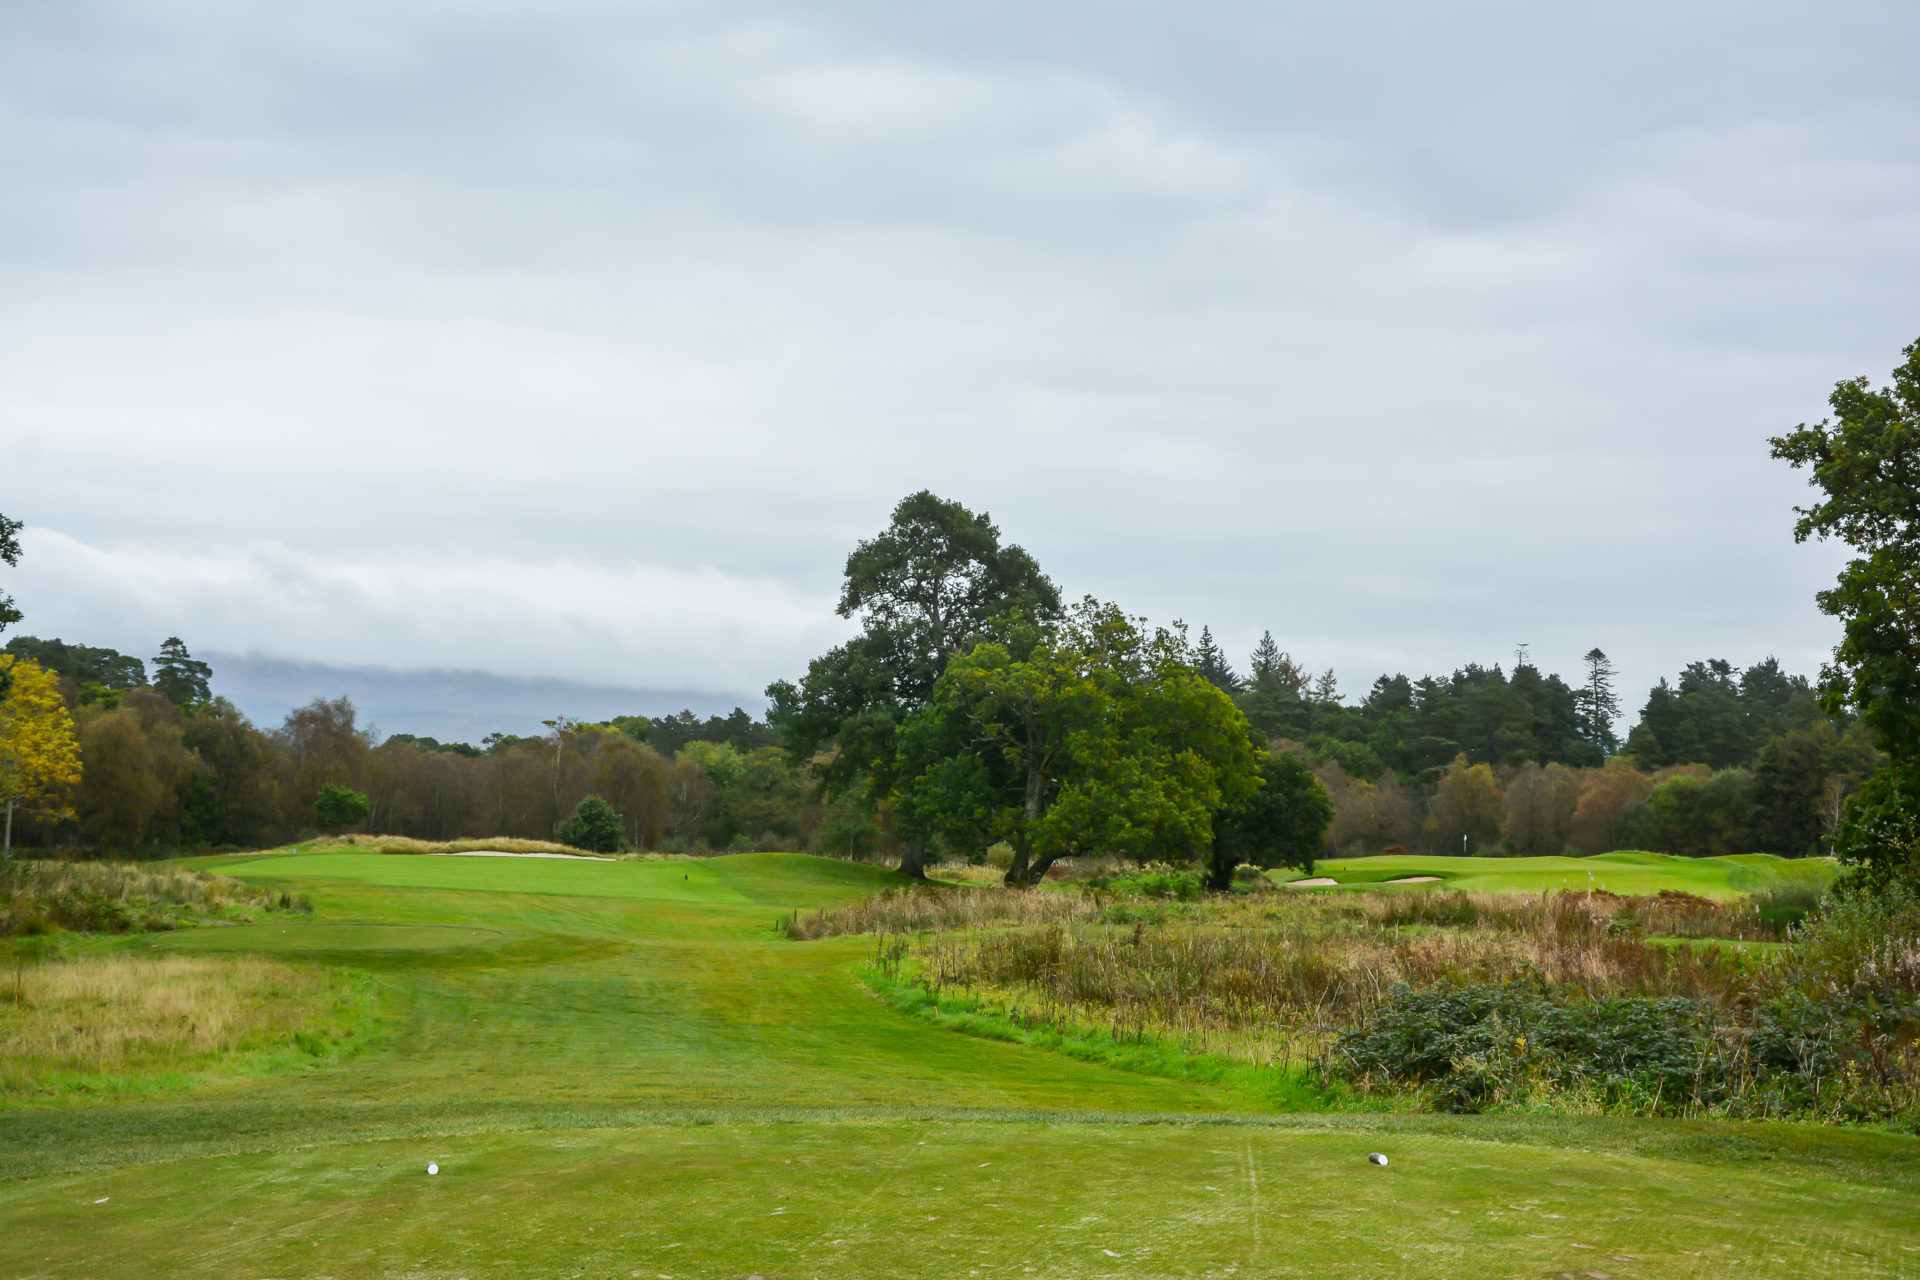 The tee shot on #14 at Loch Lomond Golf Club.